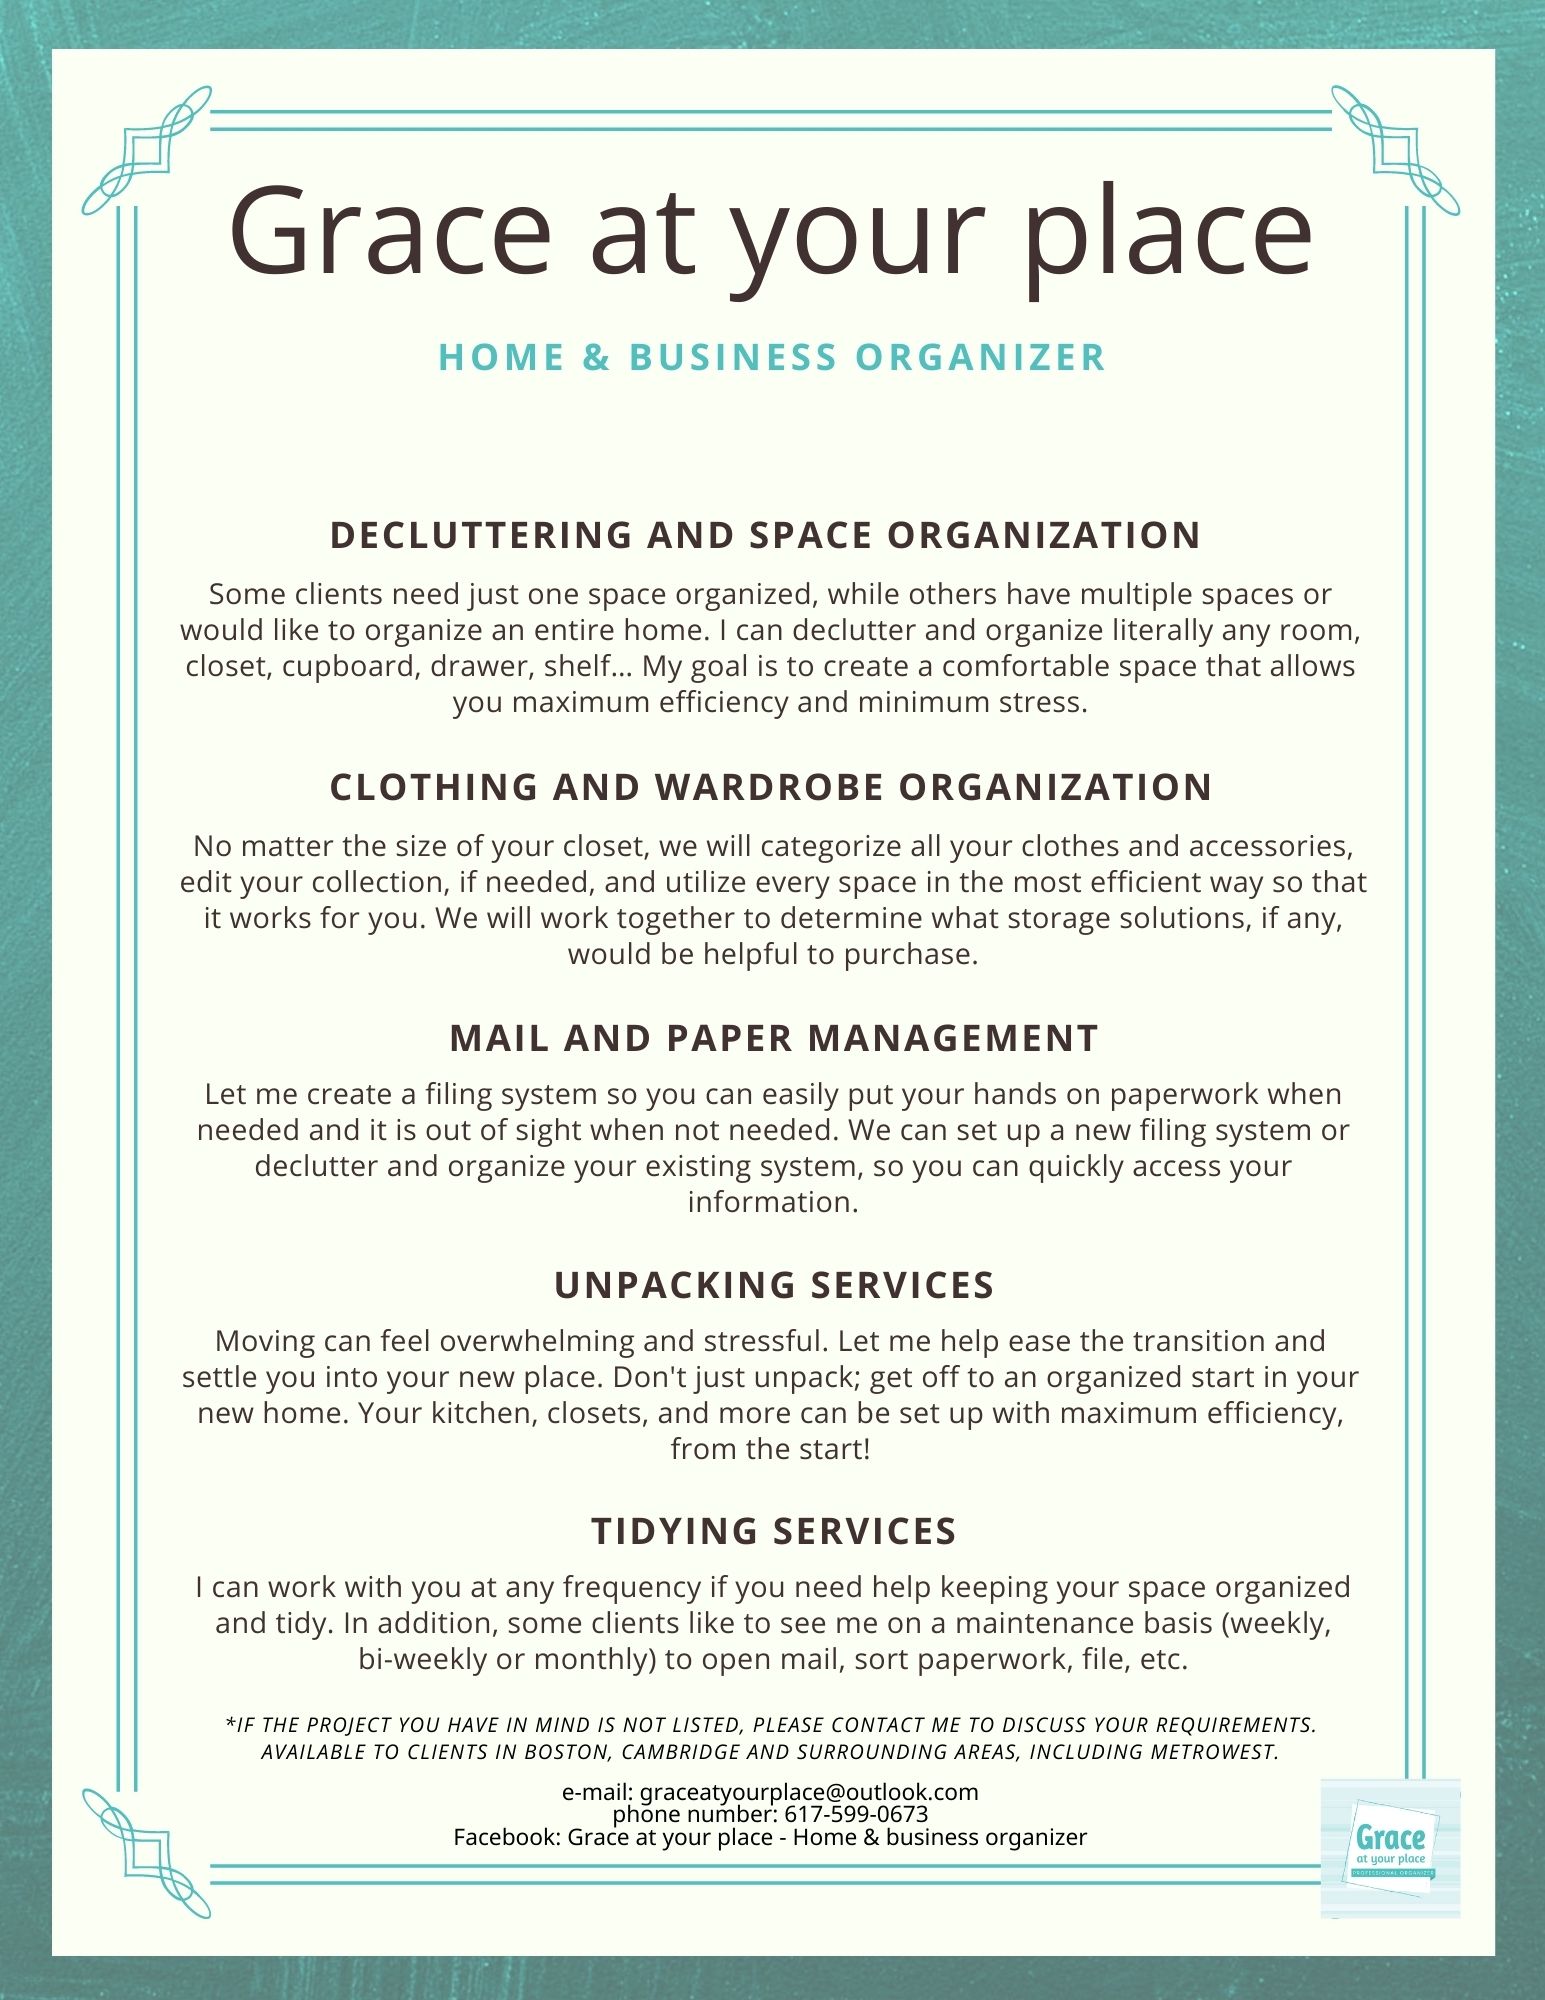 Grace at your place-Home organizer-Boston-Cambridge-Menu of services